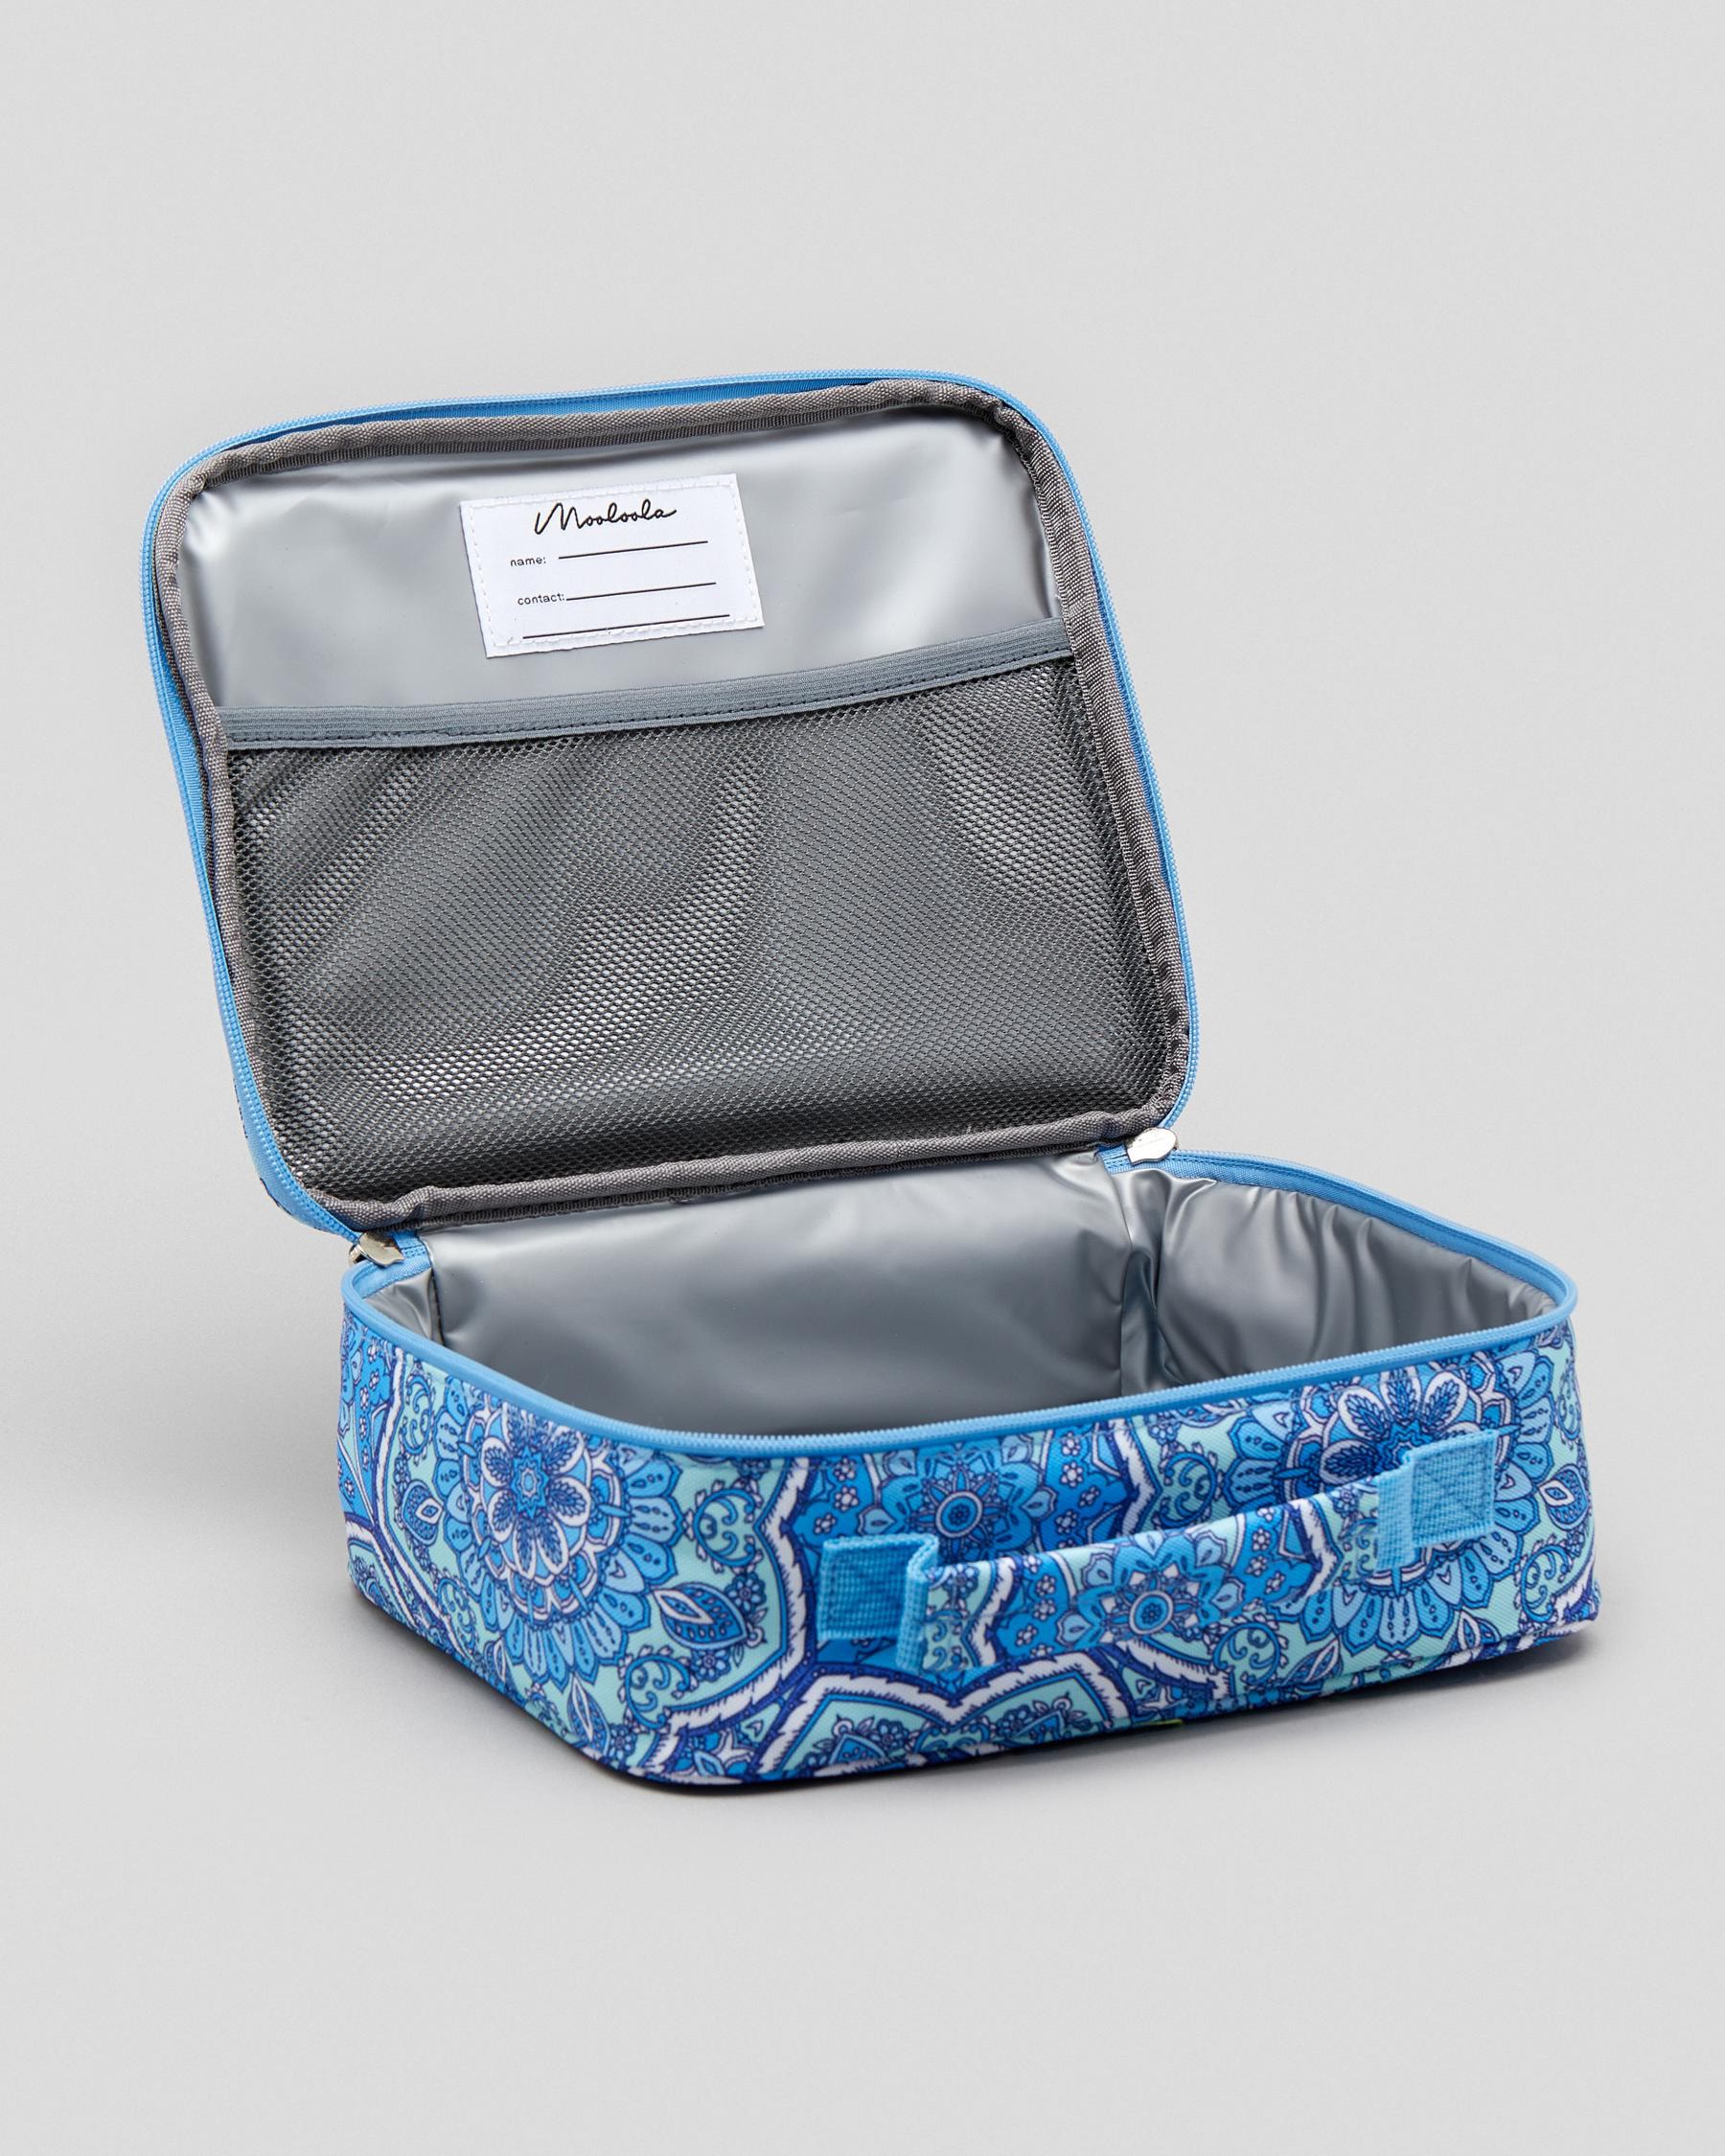 Mooloola Mandala Lunch Box In Blue - Fast Shipping & Easy Returns ...